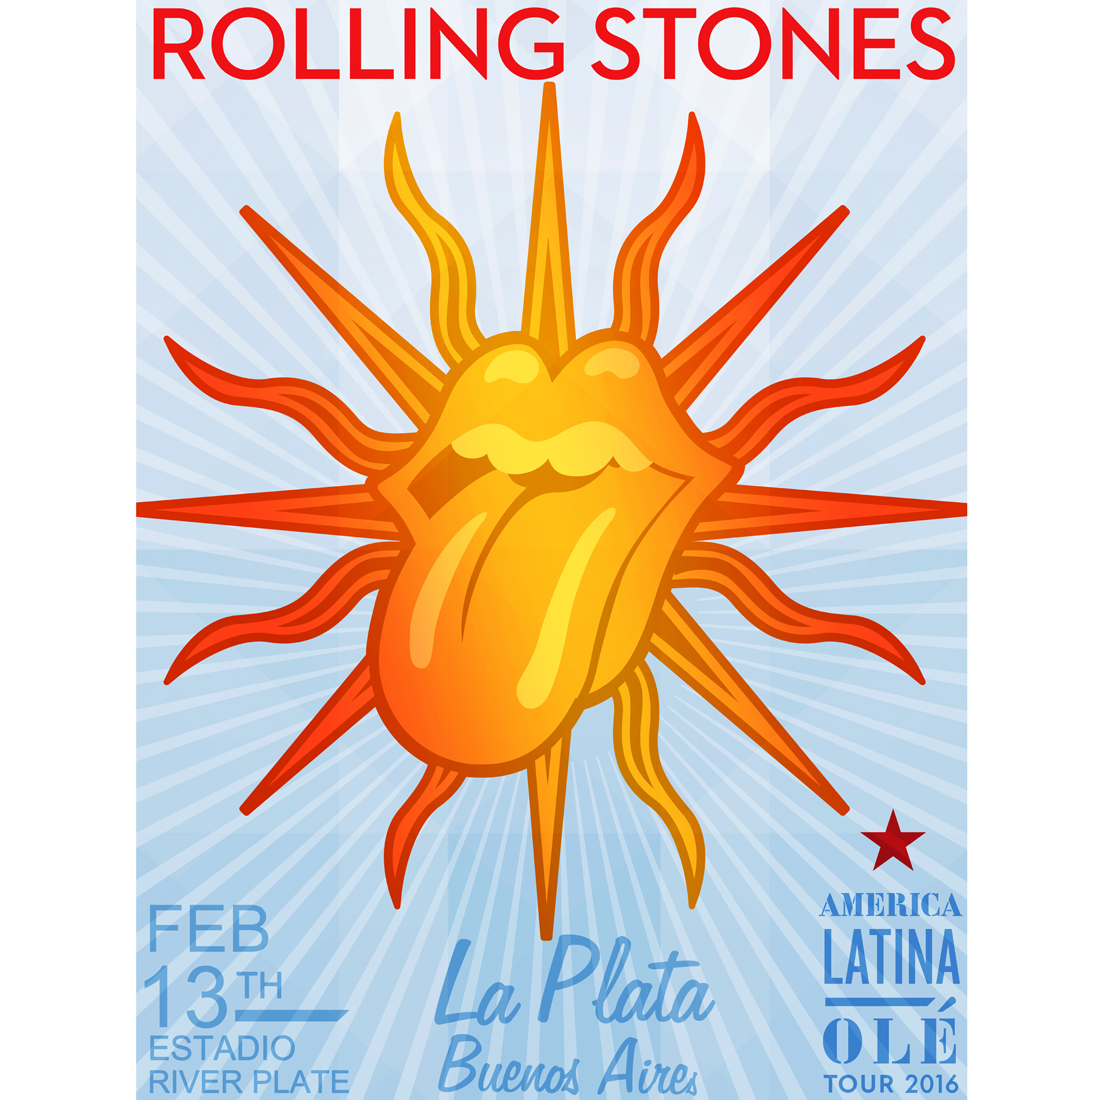 therollingstones poster merchandise